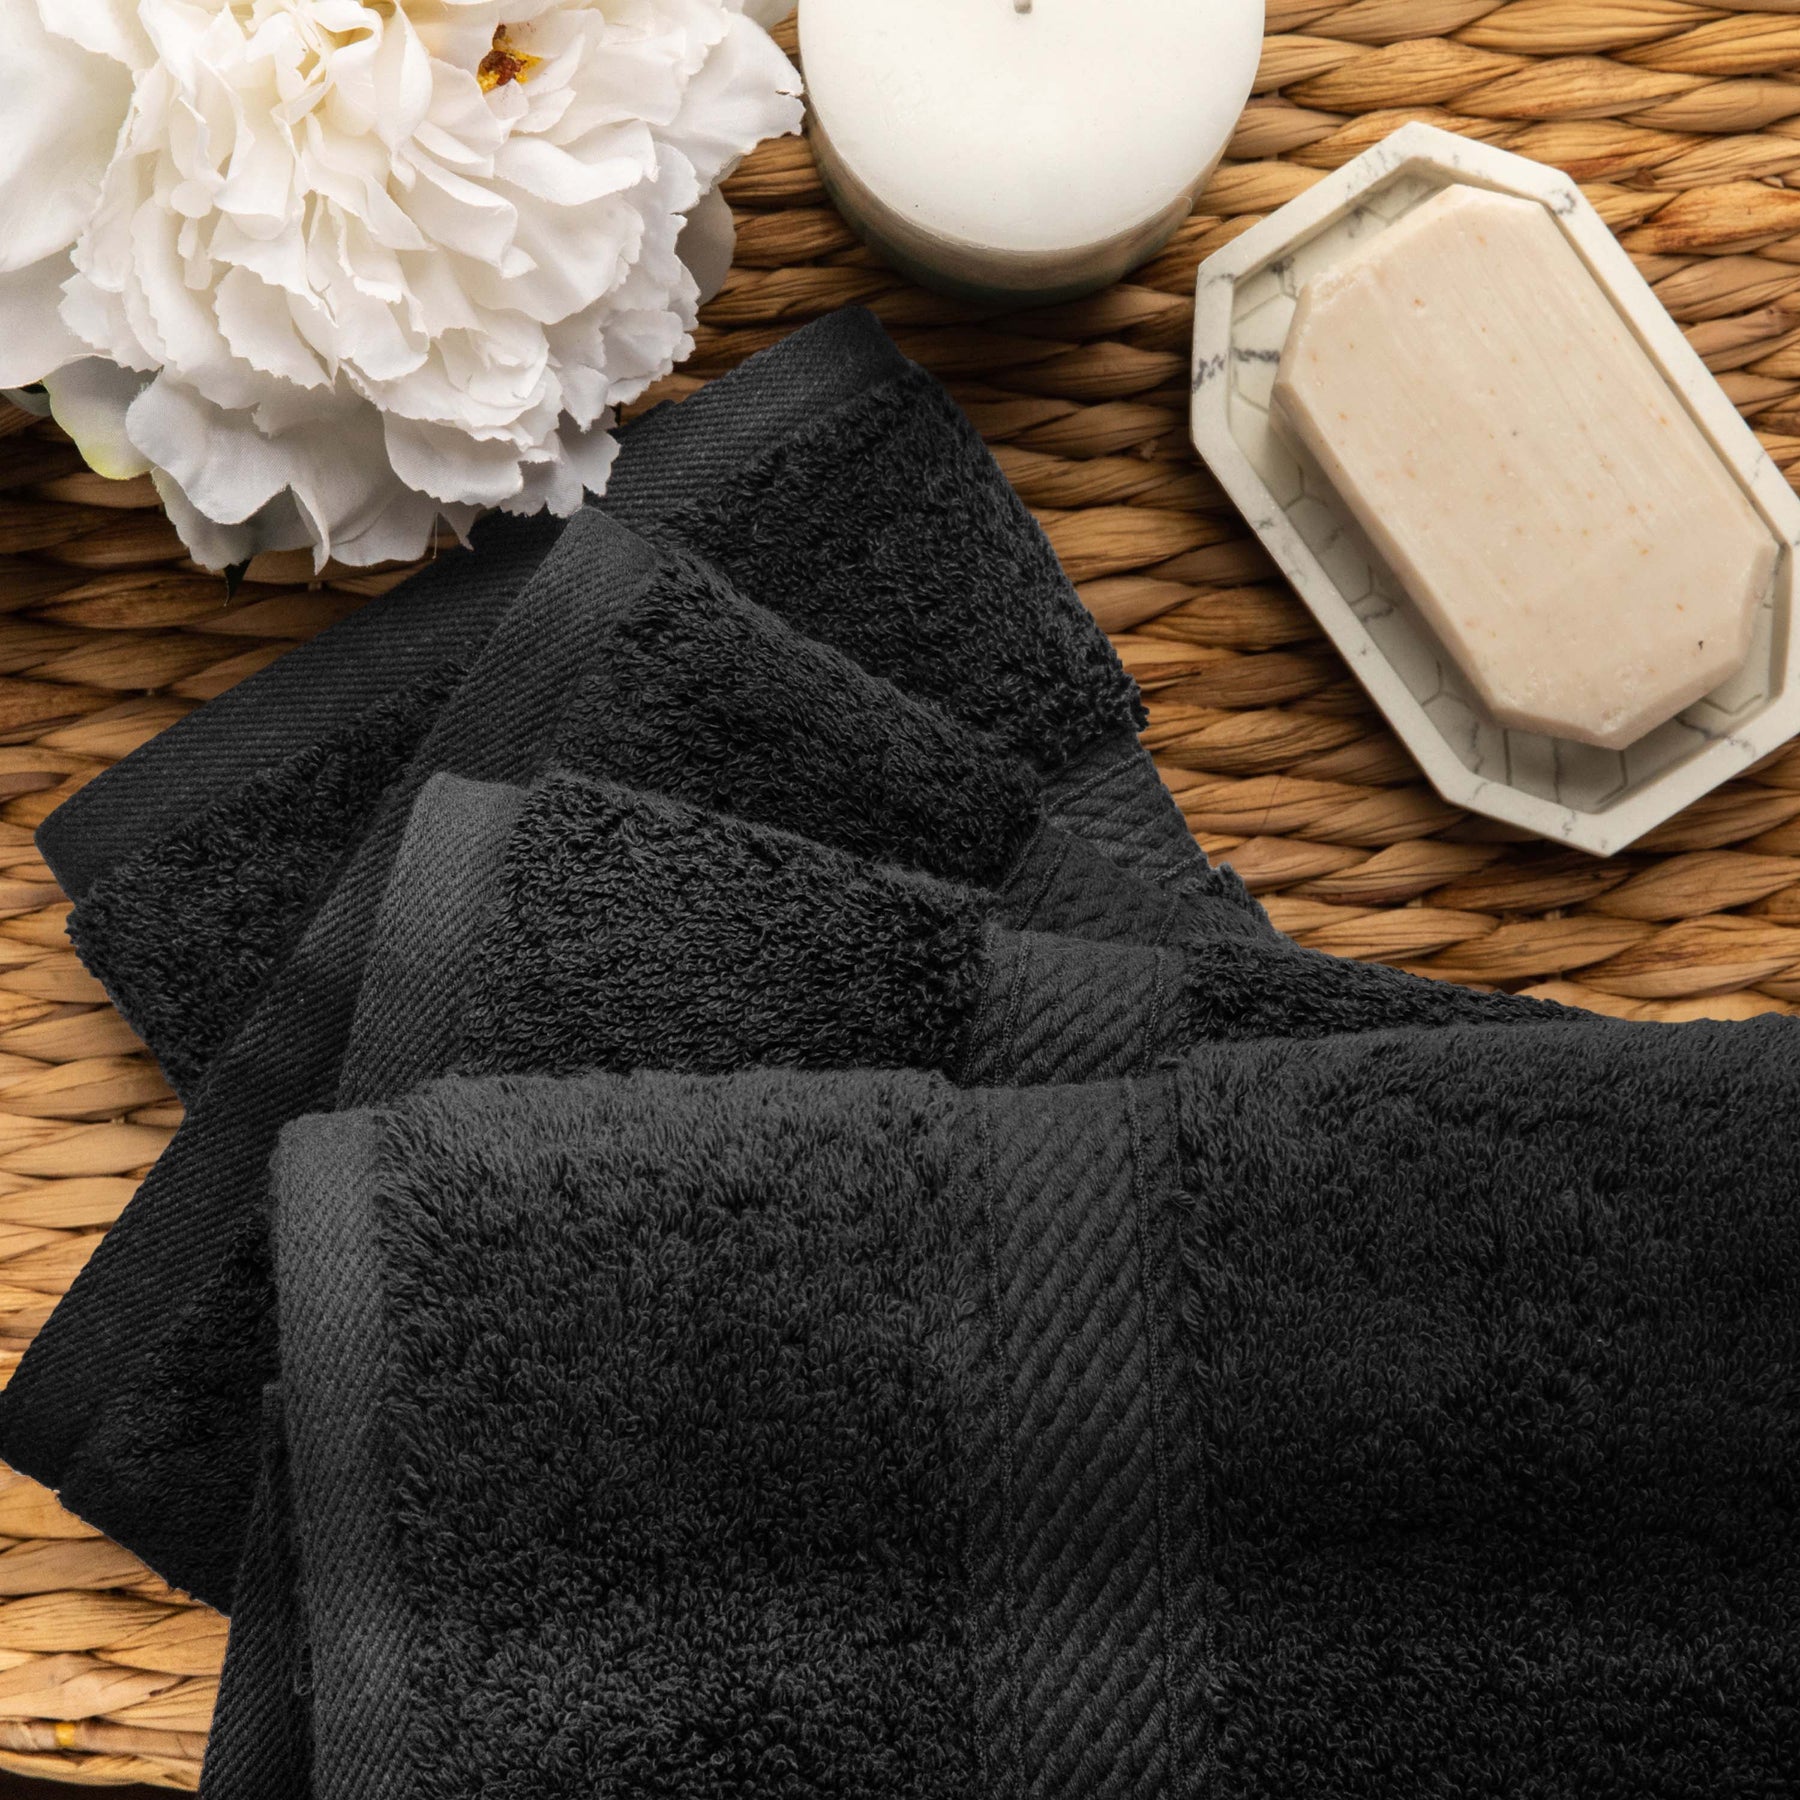 Superior Egyptian Cotton Plush Heavyweight Absorbent Luxury Soft 9-Piece Towel Set - Black